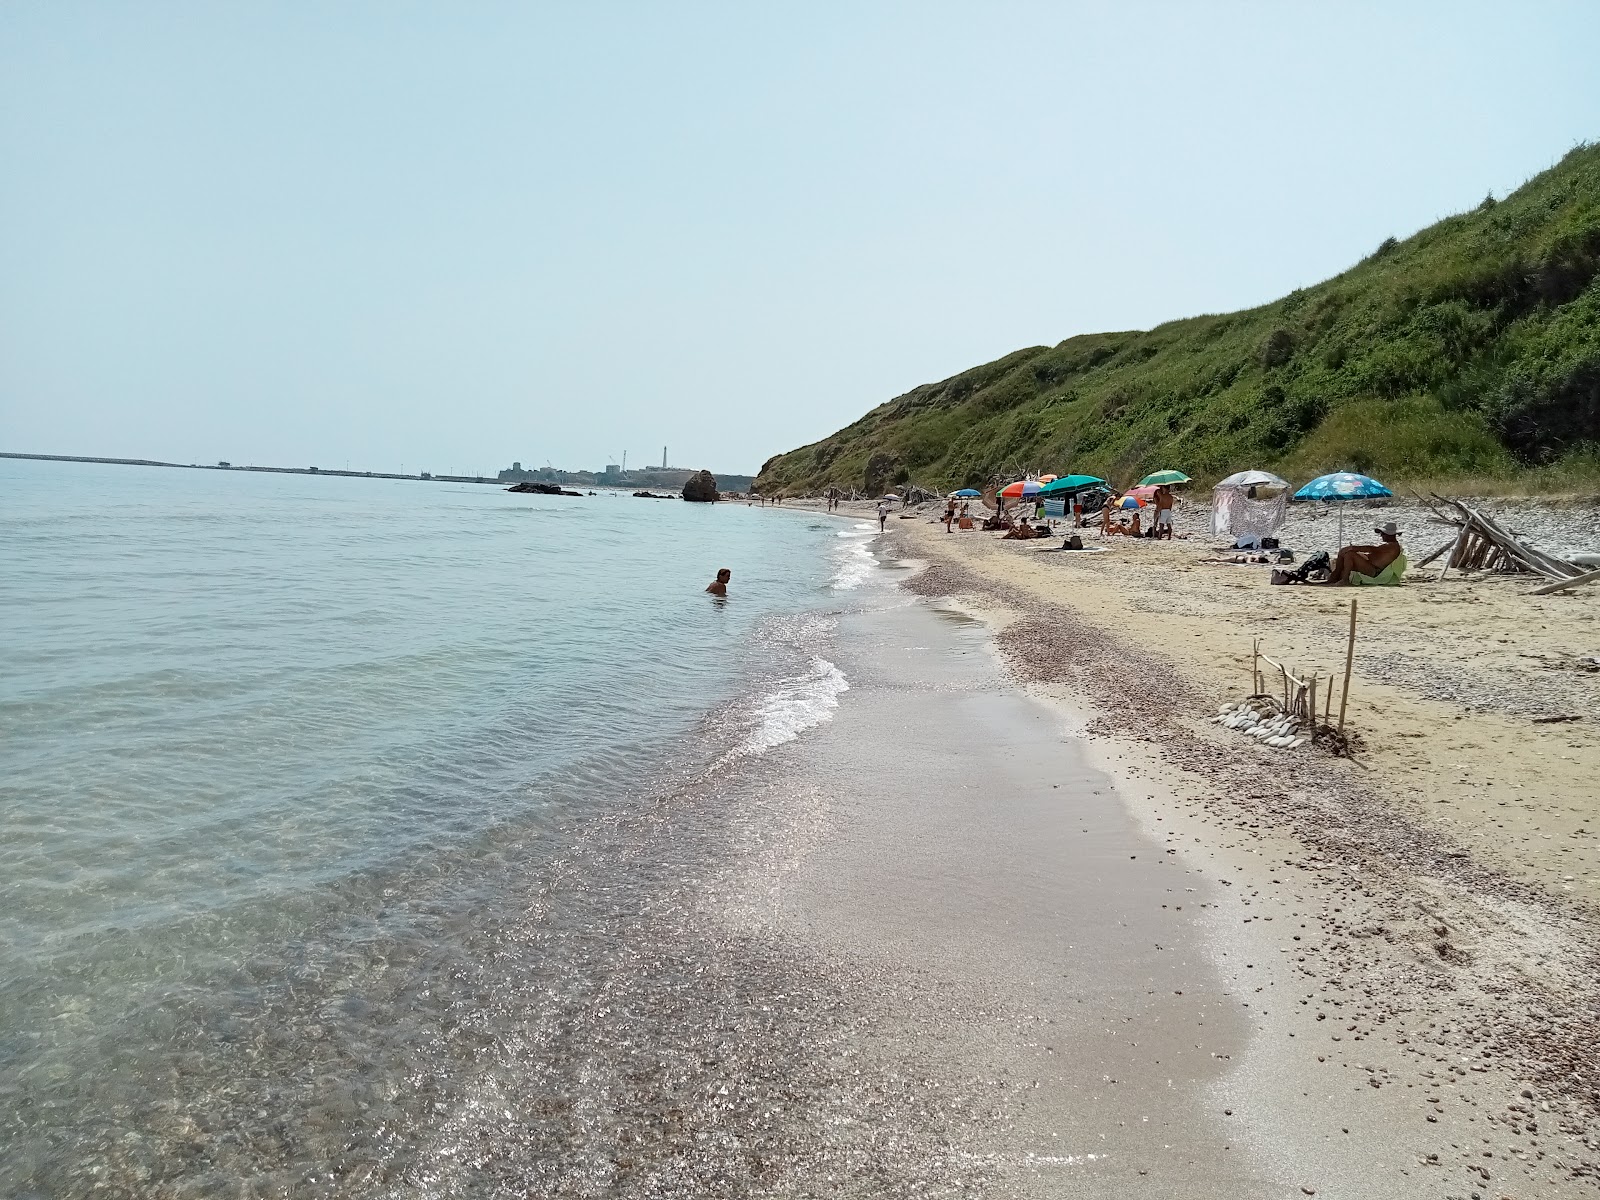 Foto de Spiaggia dei Libertini localizado em área natural